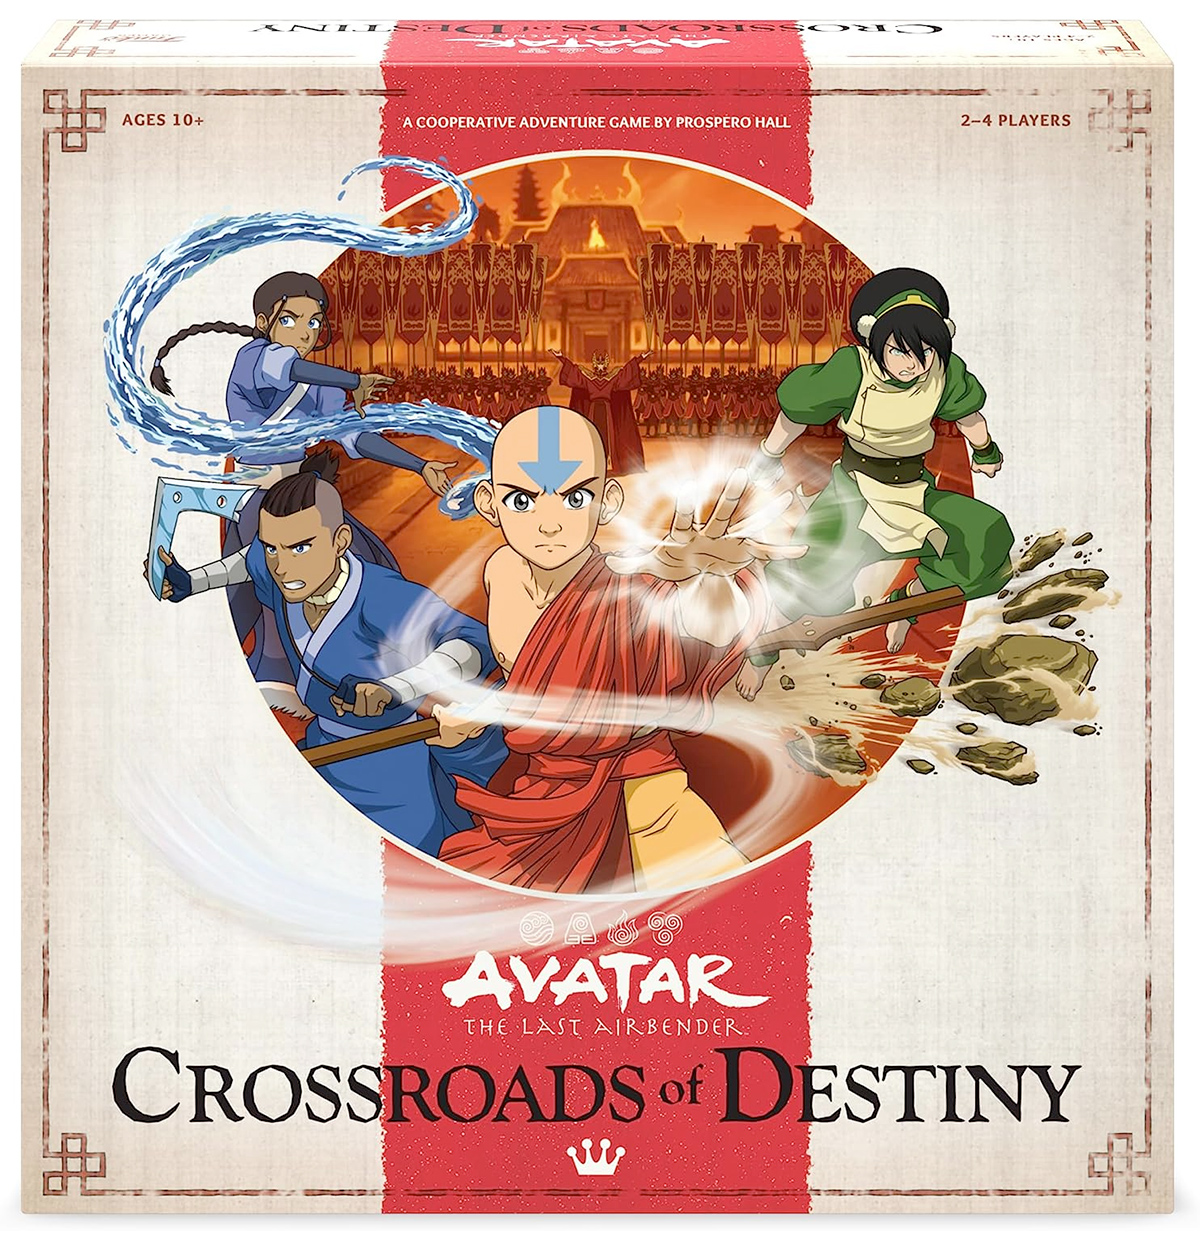 Avatar The Last Airbender Crossroads of Destiny Game